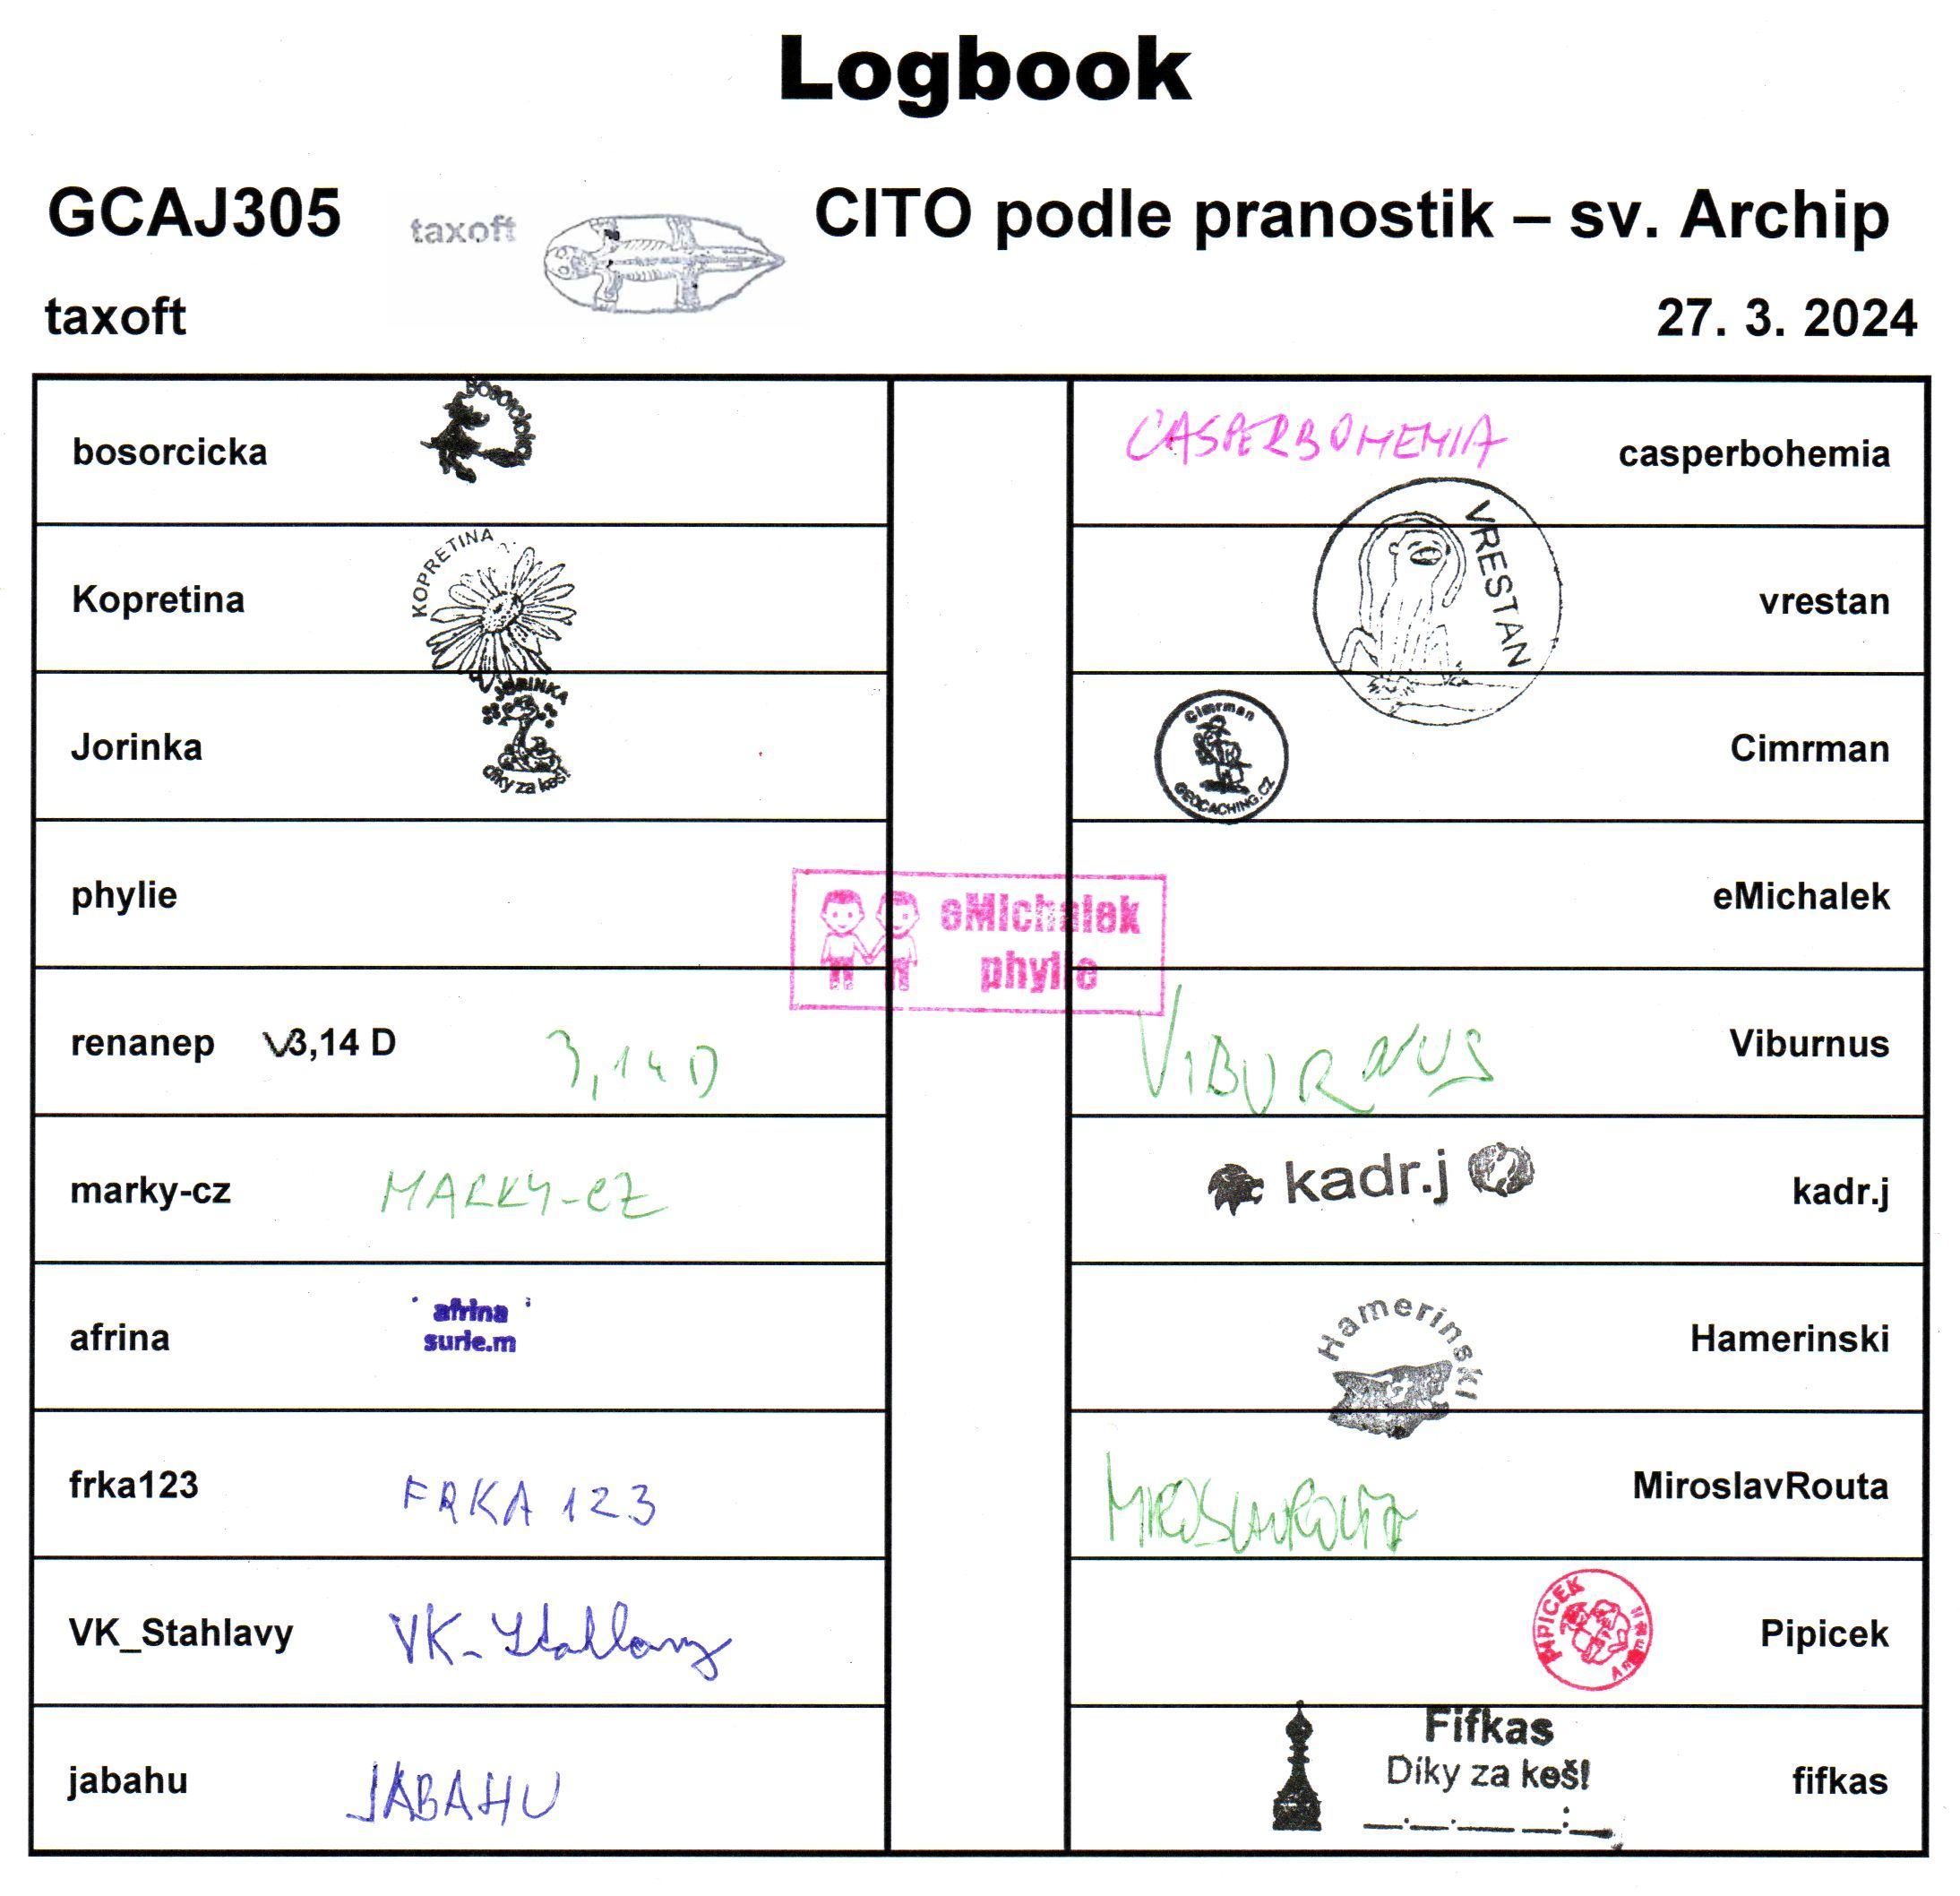 GCAJ305 - CITO podle pranostik - sv. Archip - logbook